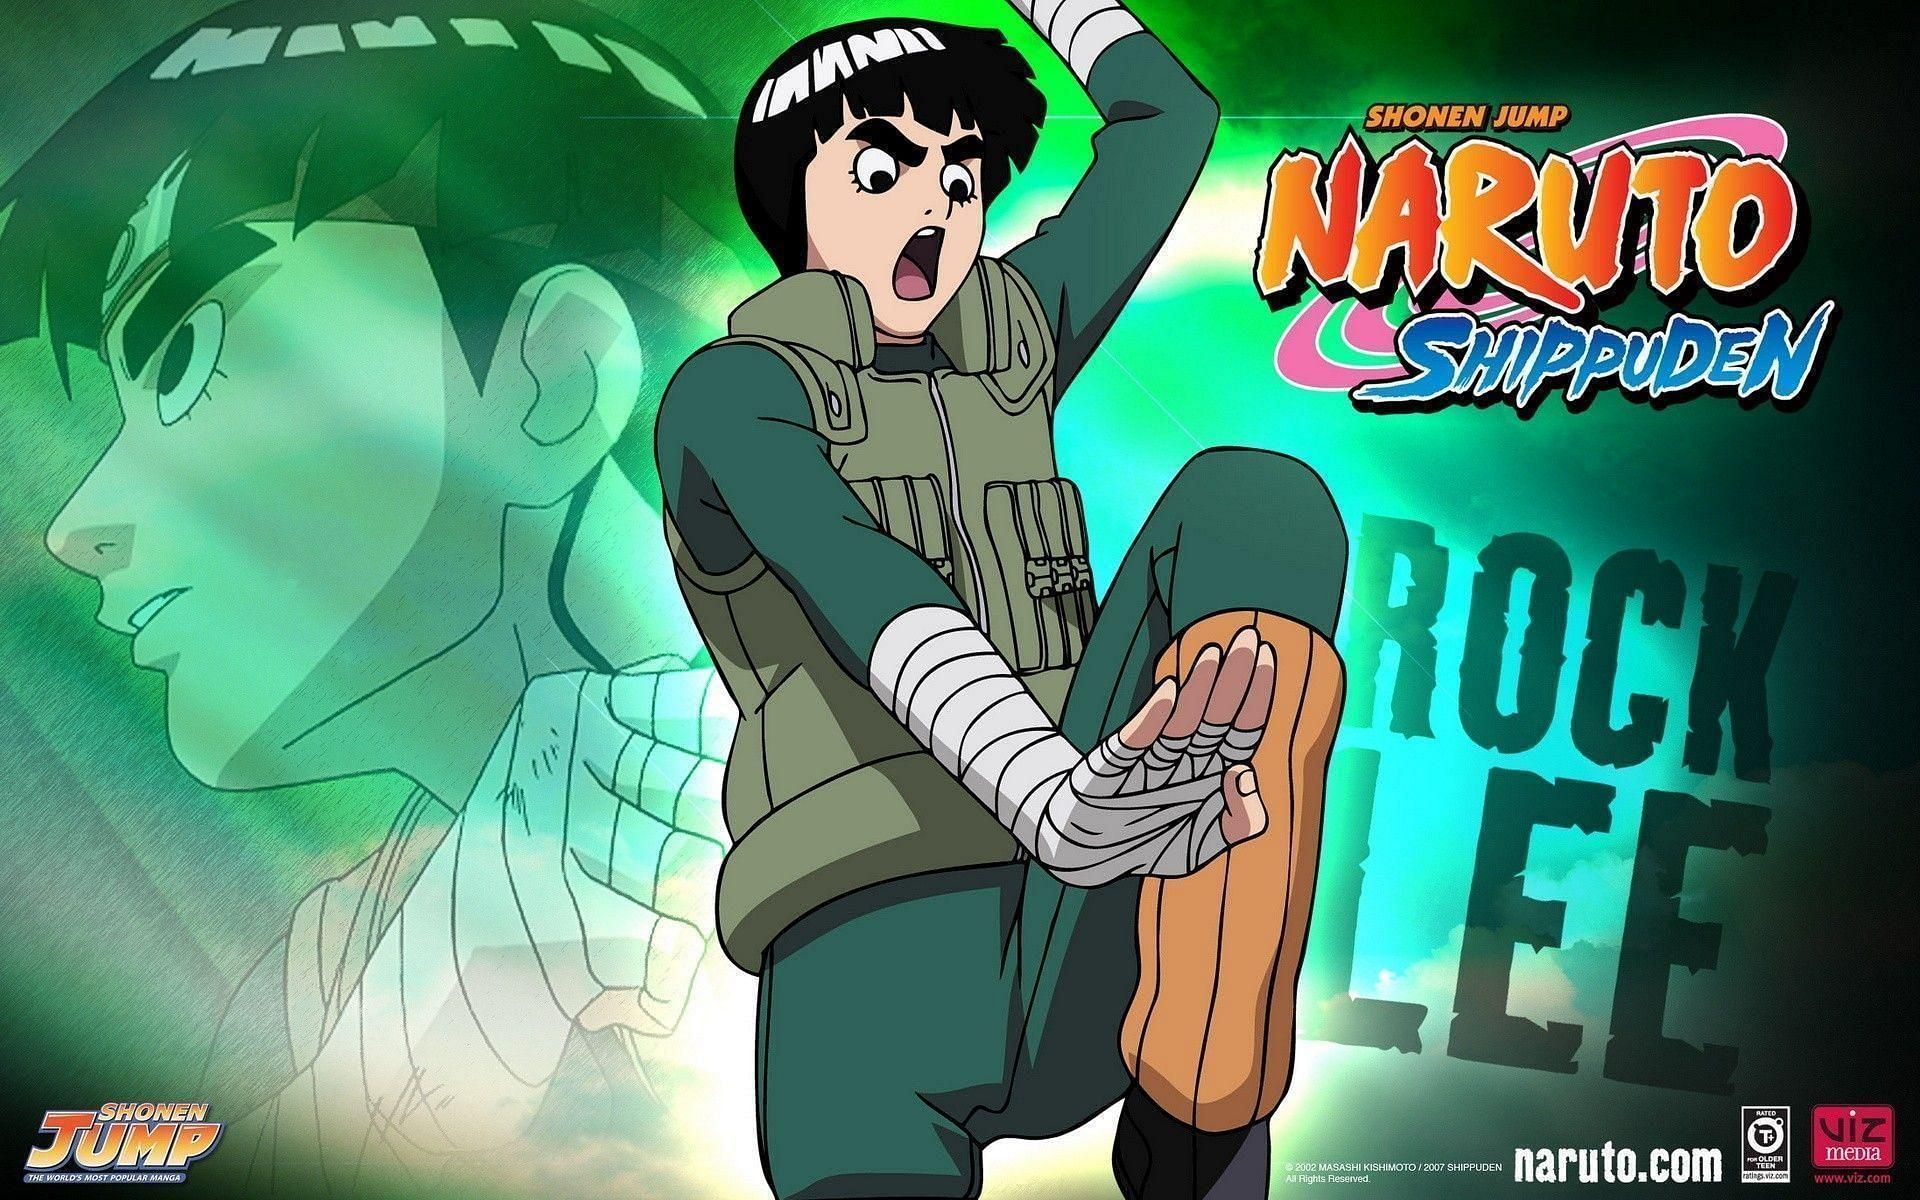 Rock Lee in Naruto Shippuden (Image via Studio Pierrot)